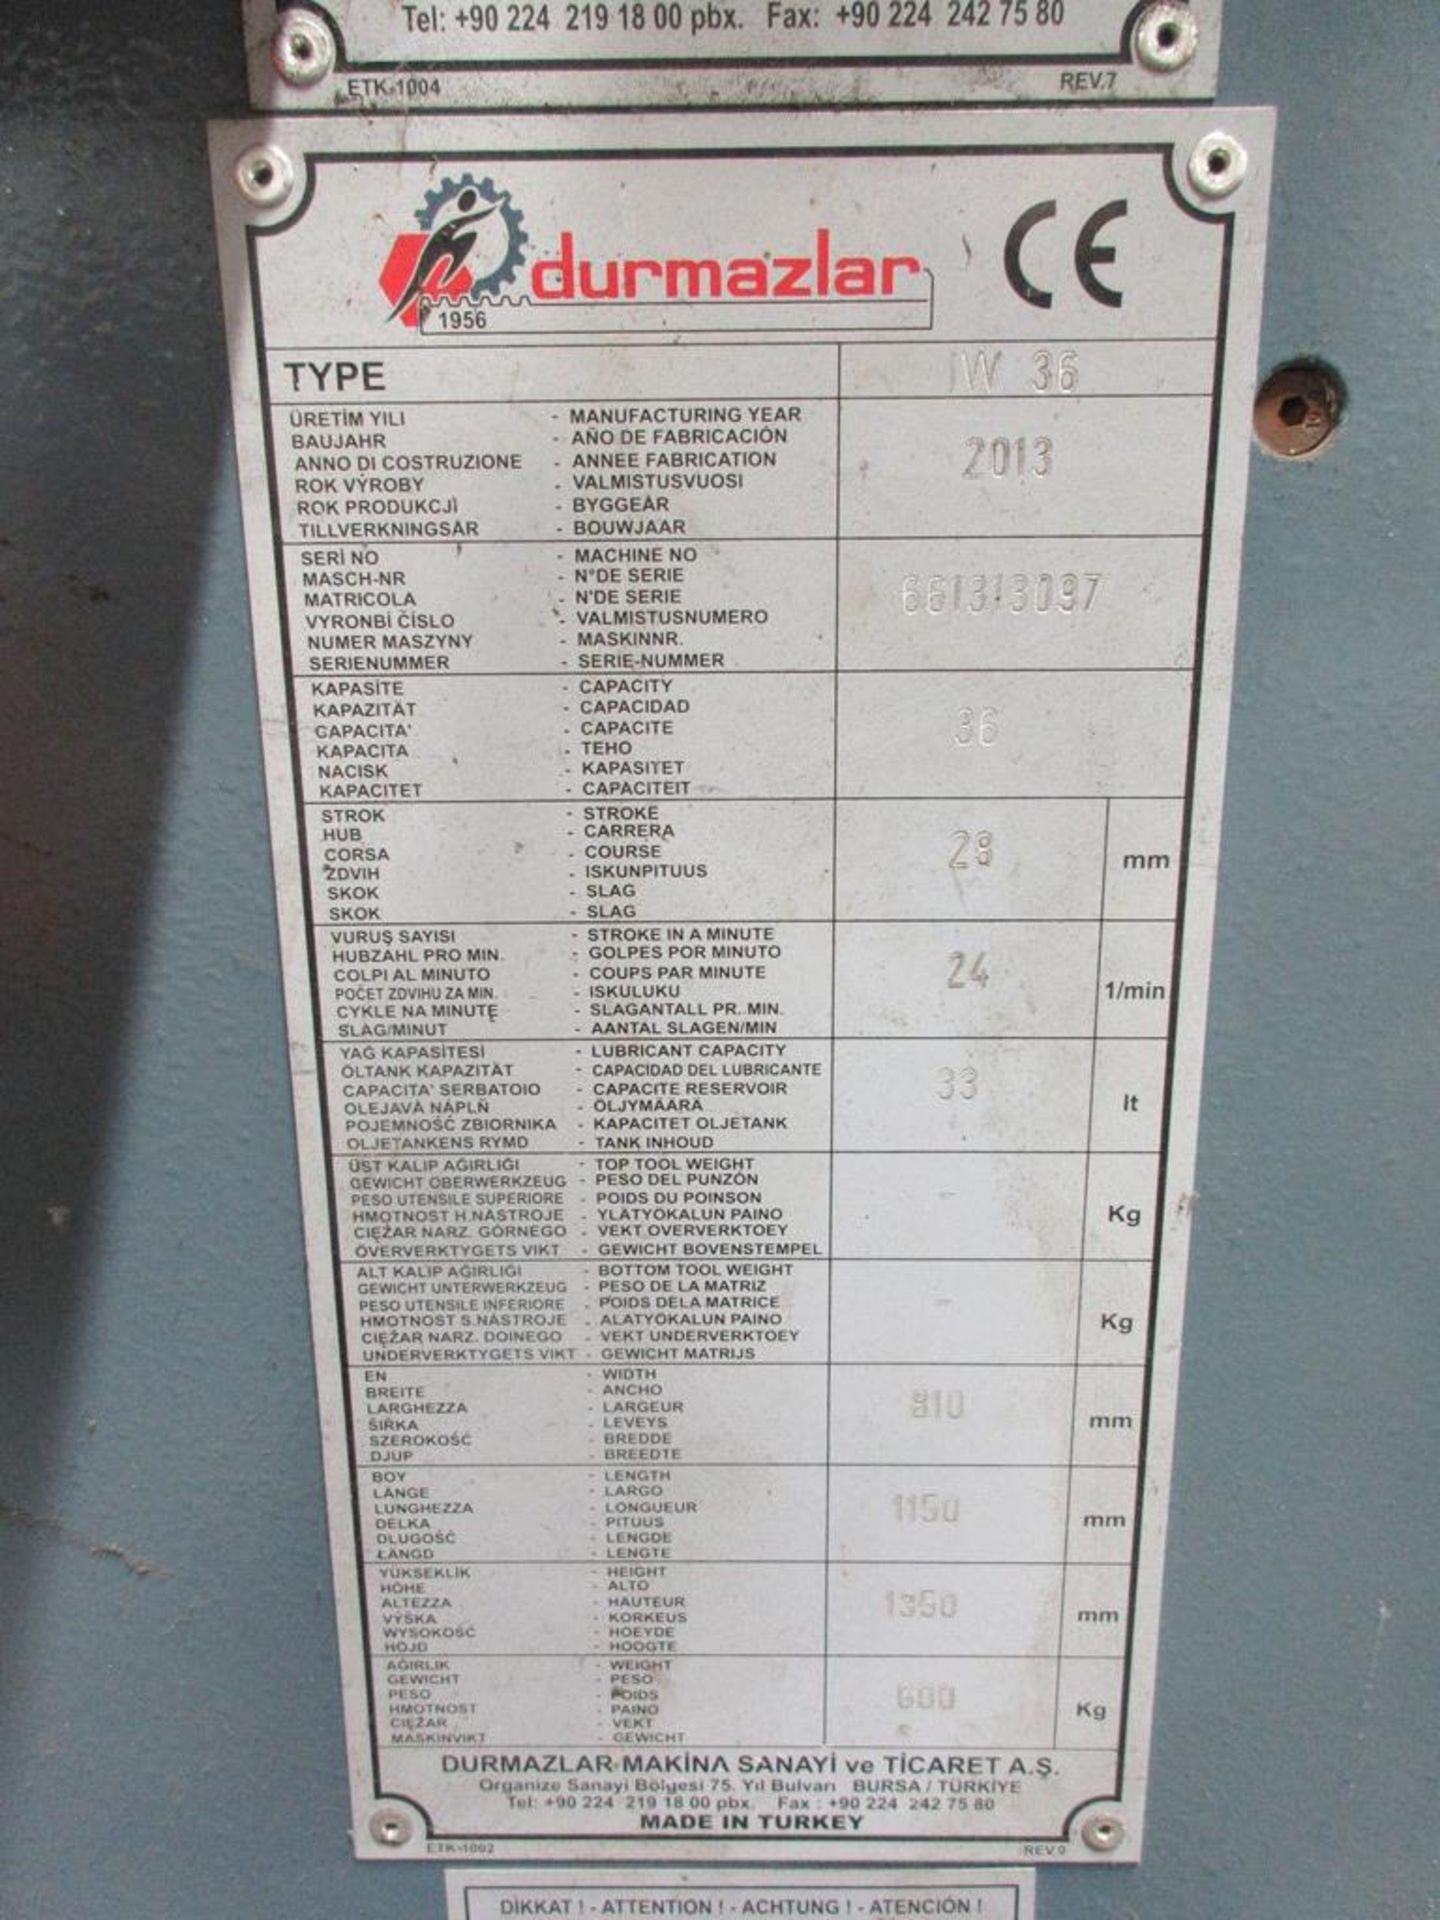 Durma IW36 hydraulic steel worker, serial no. 661313097 (2013) - Image 4 of 6